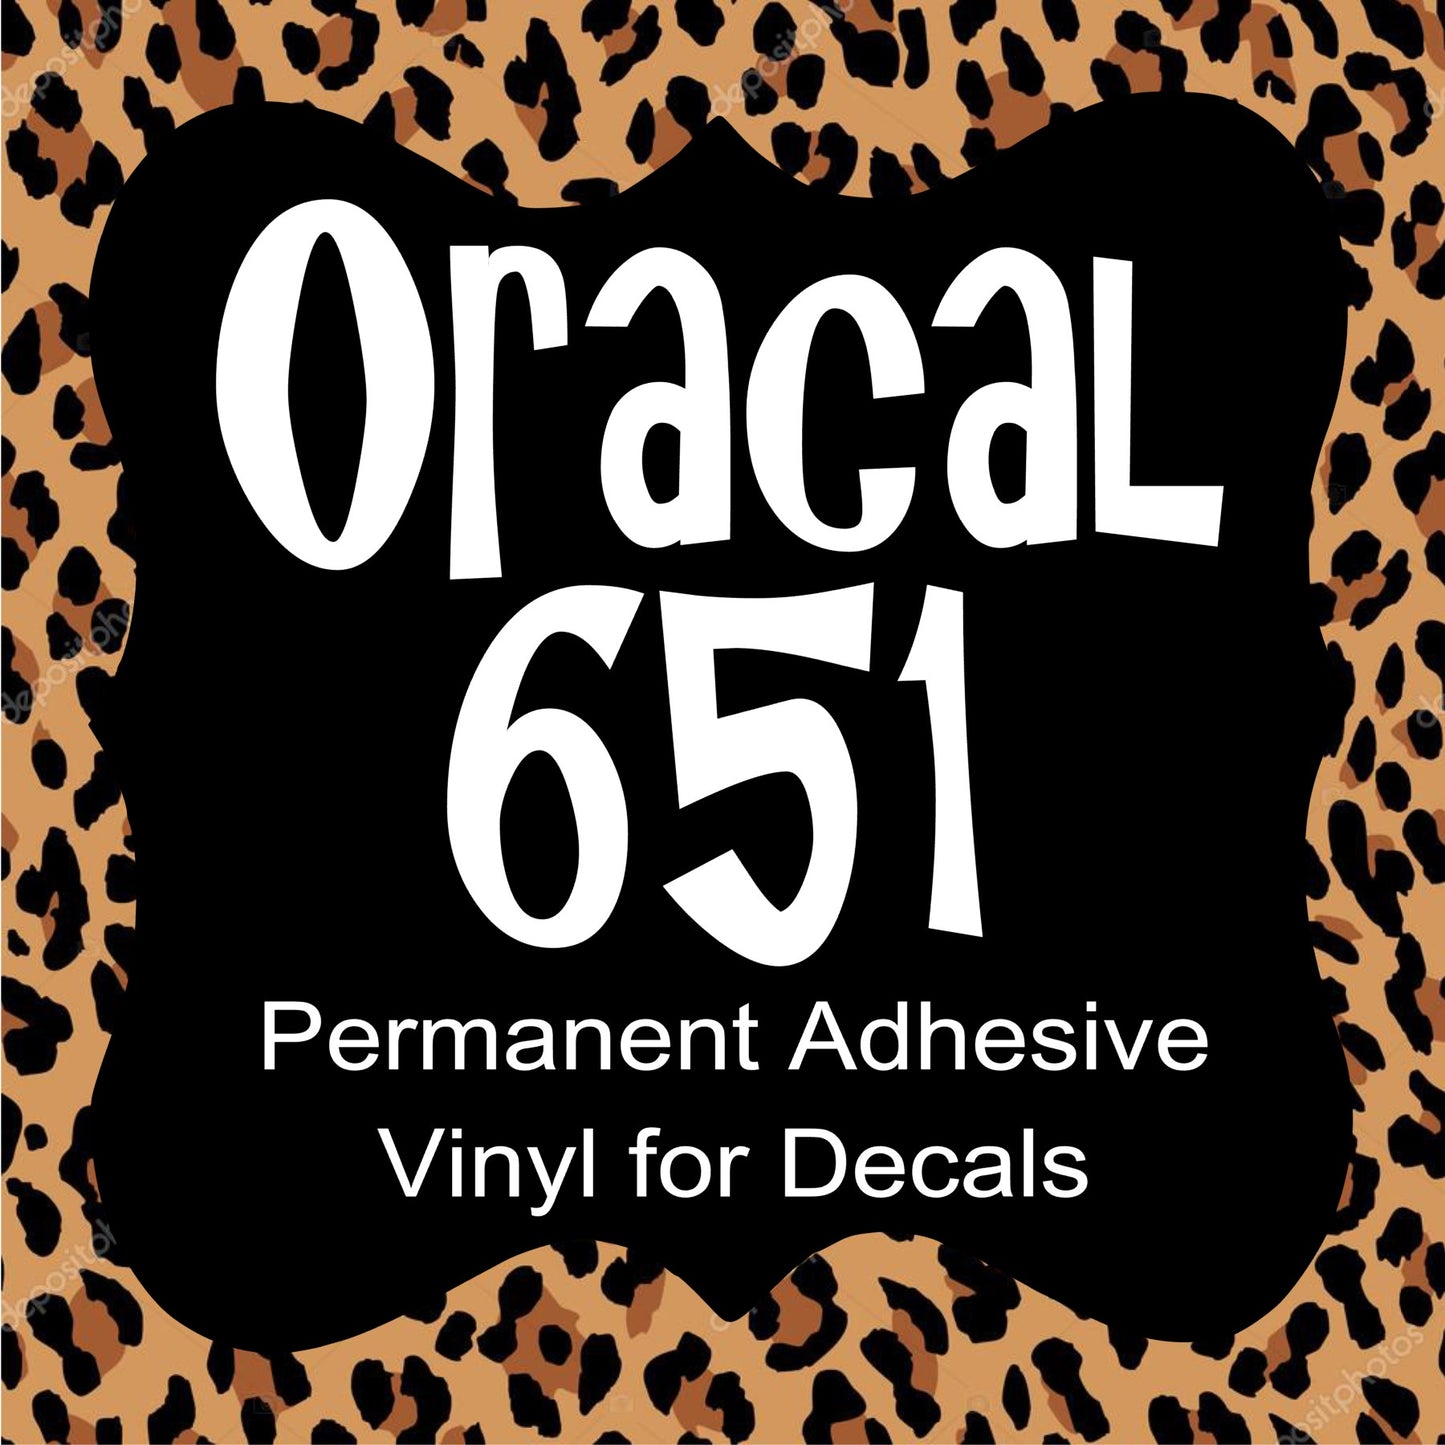 Oracal 651 - 1 Yard